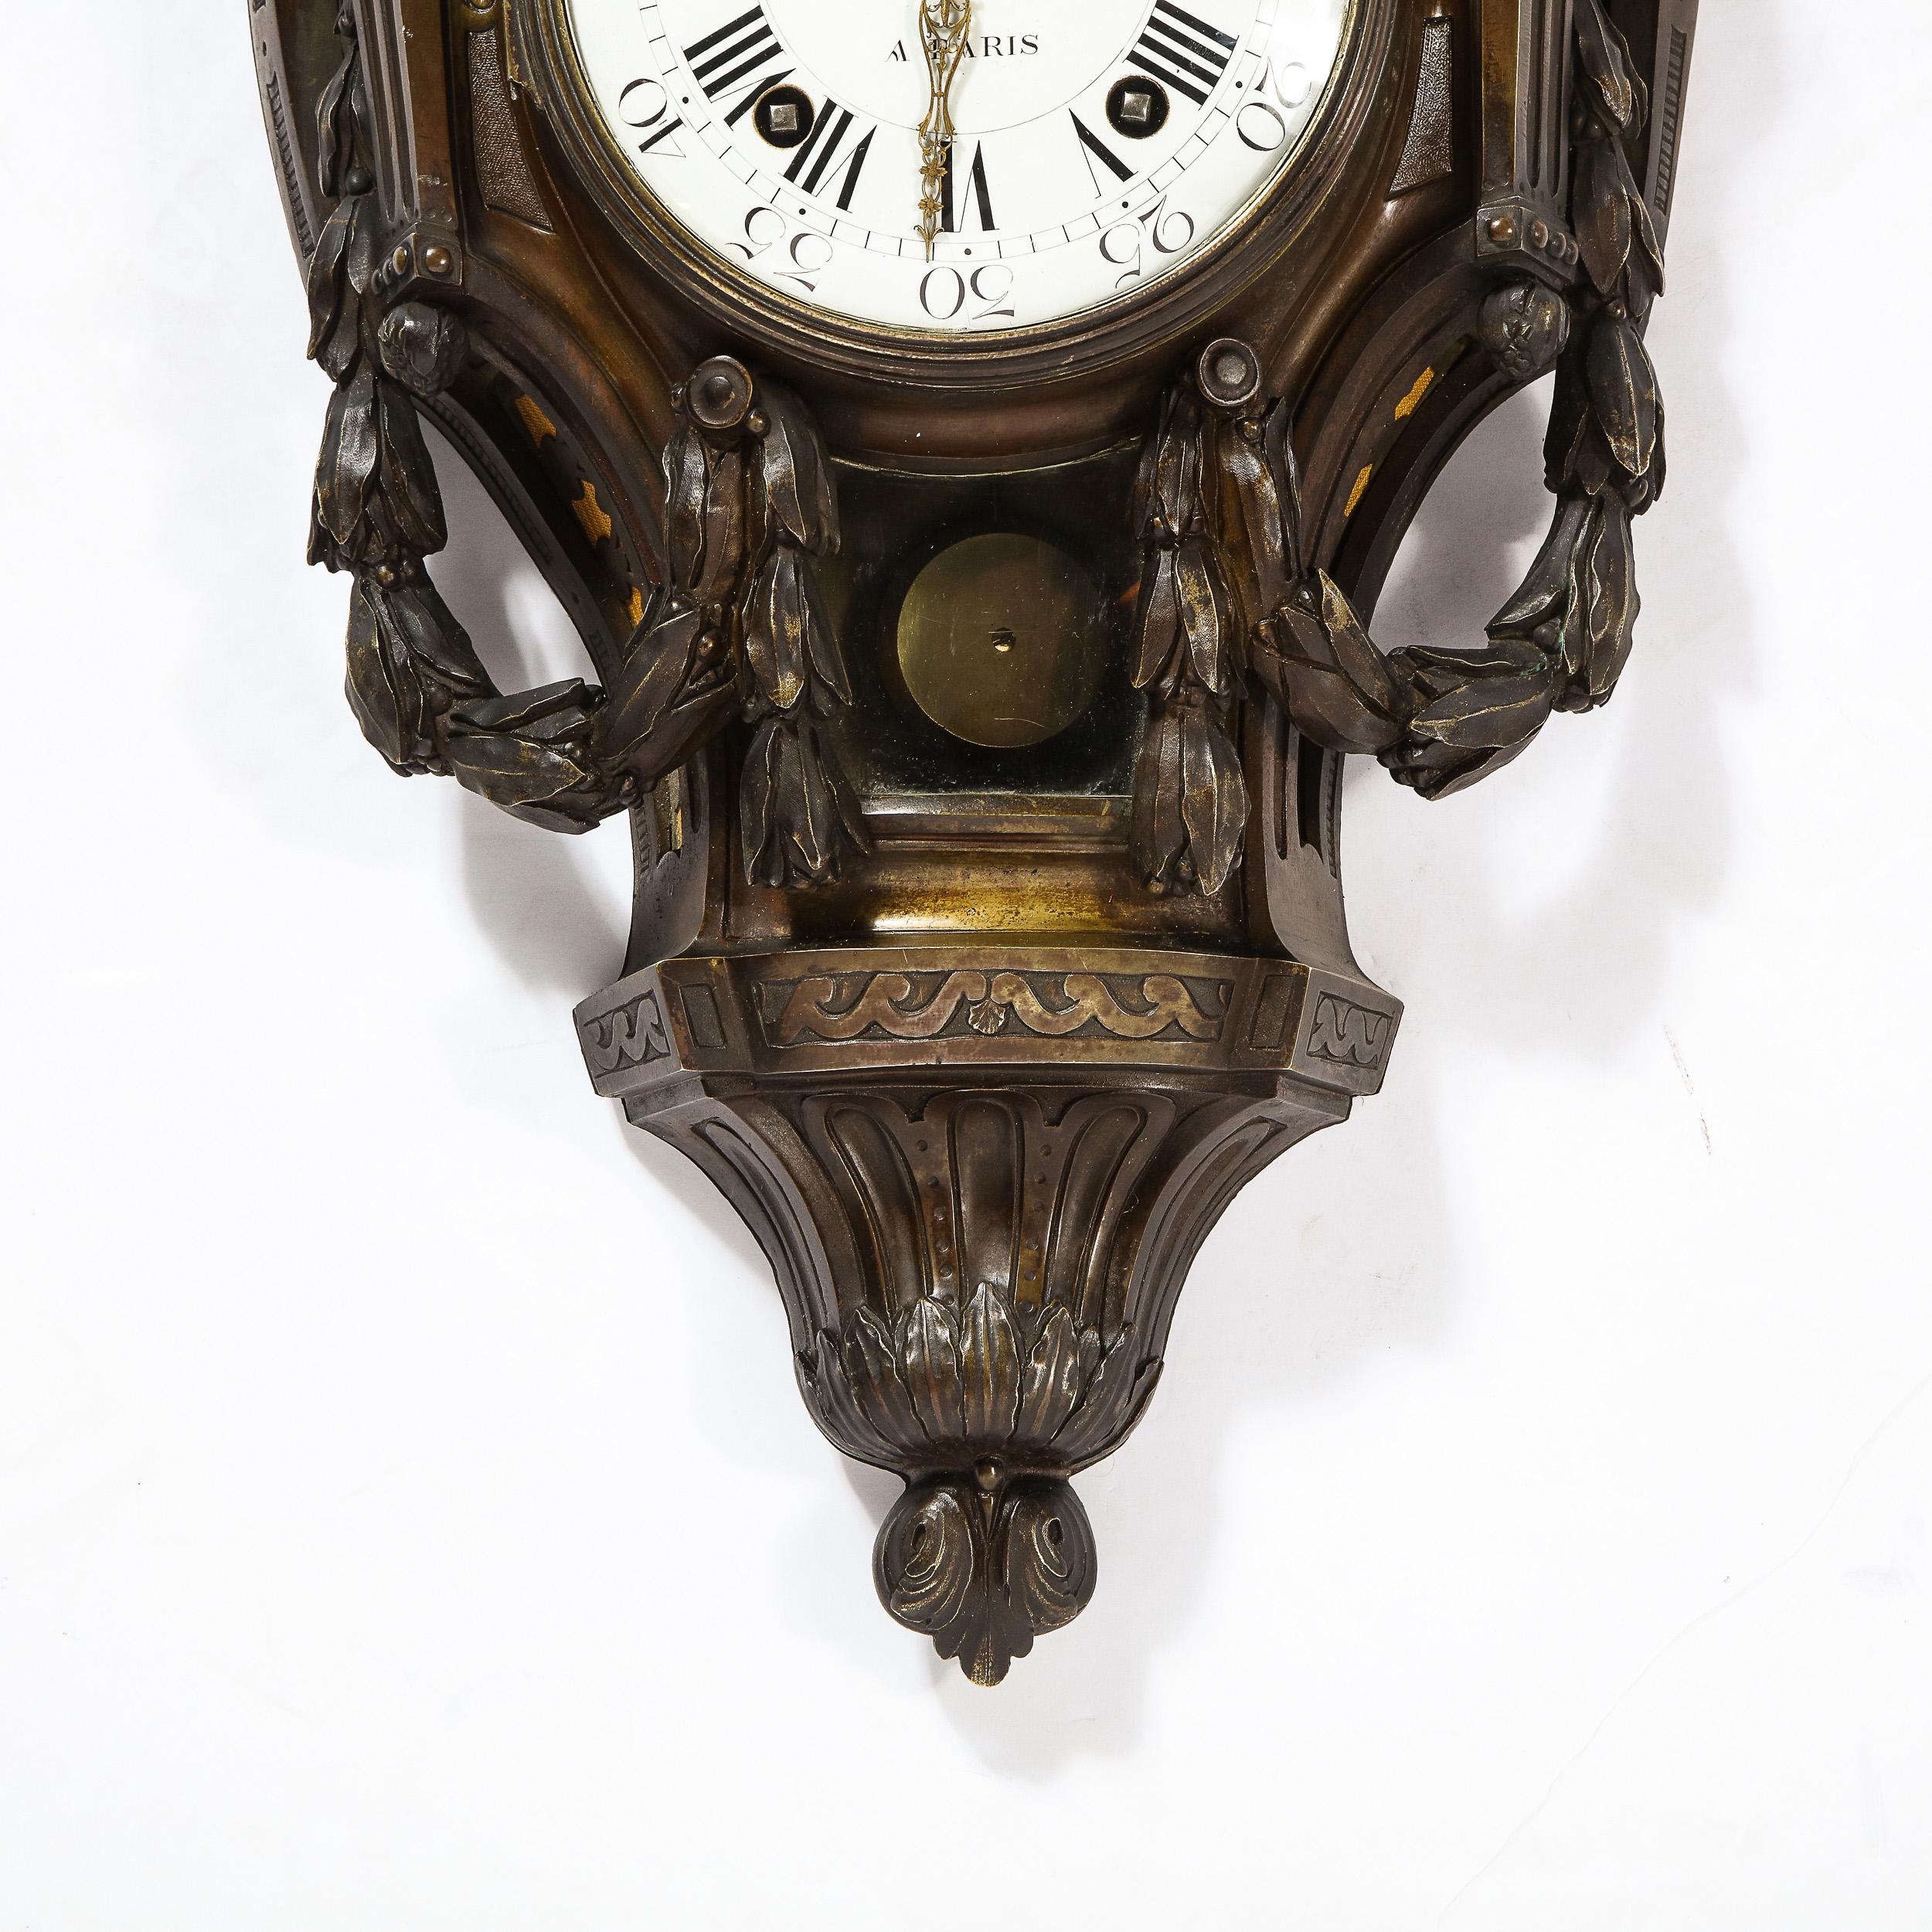 18th century wall clock